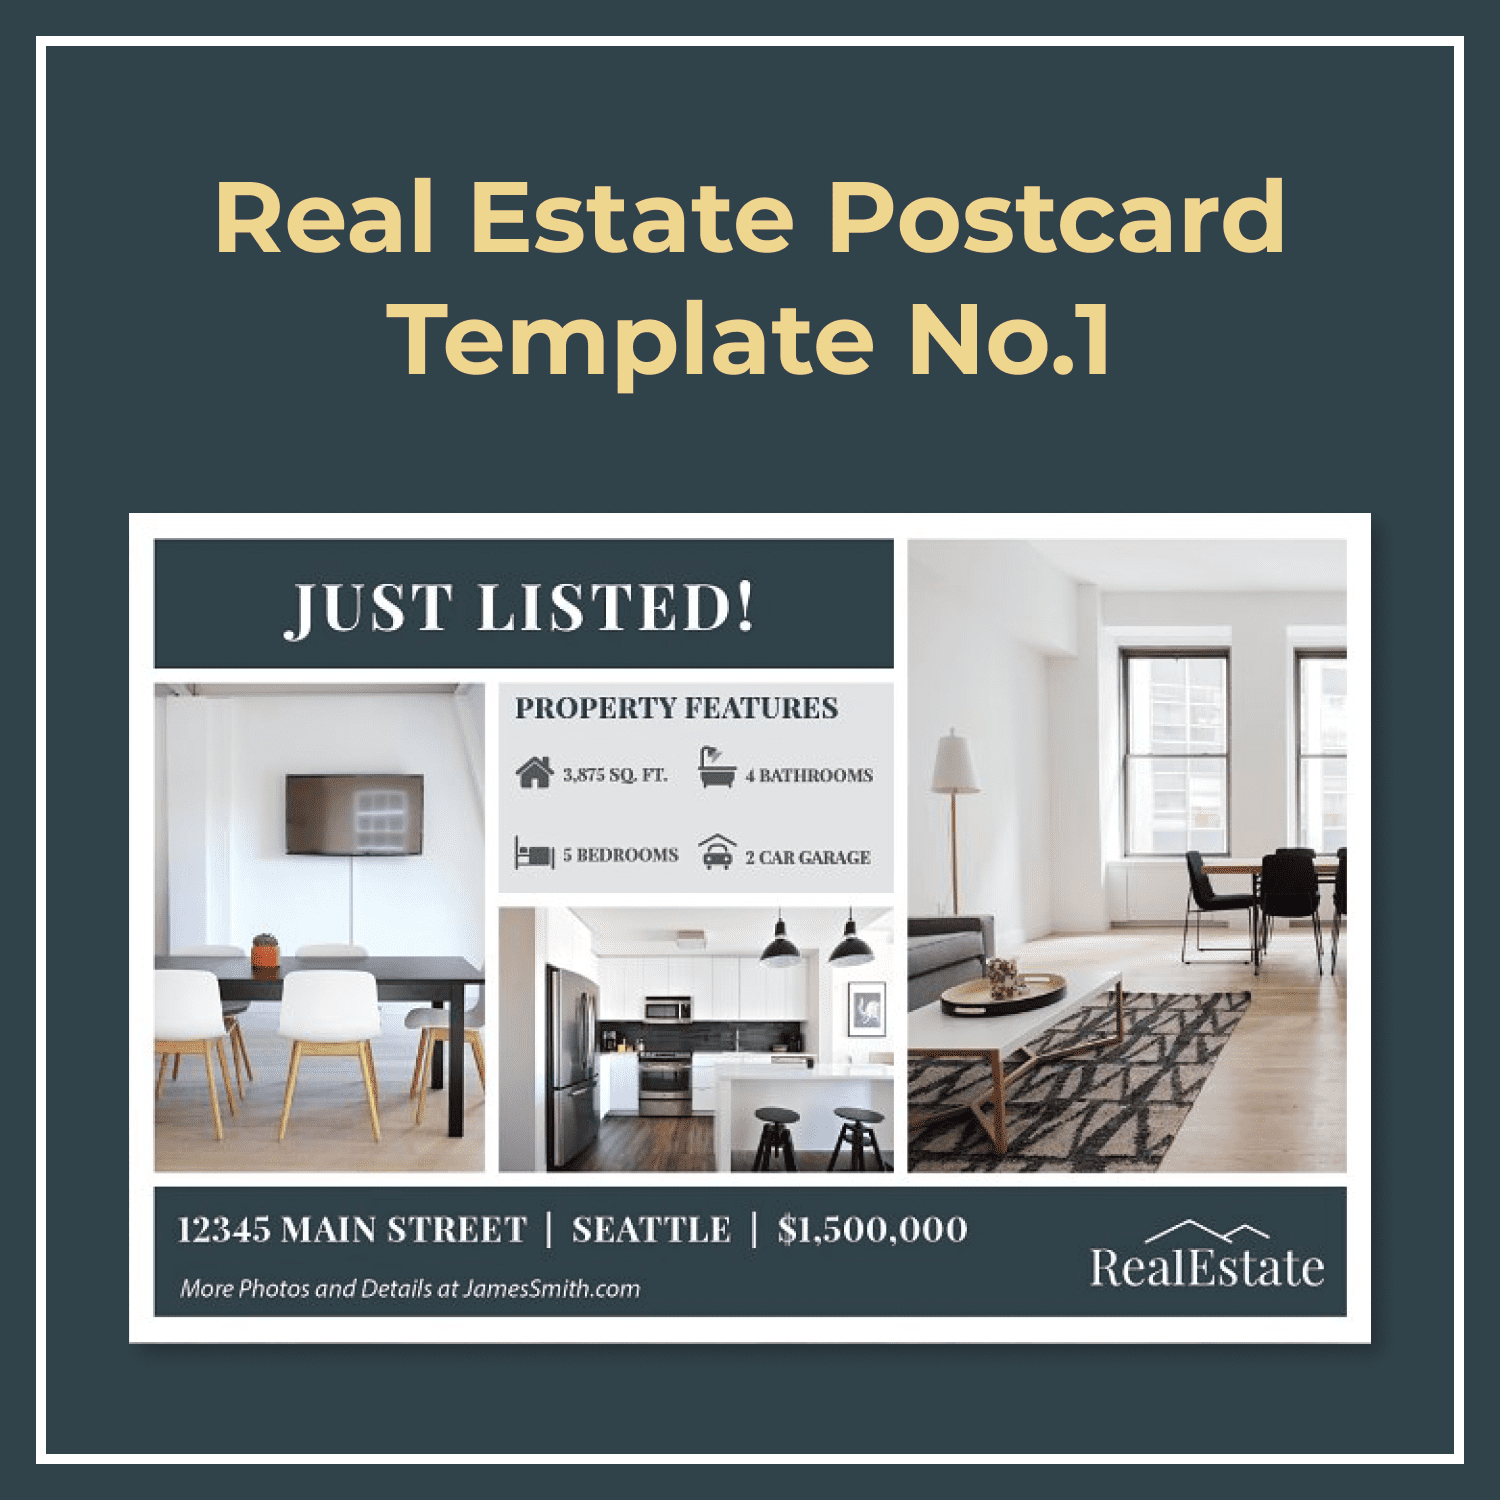 Real Estate Postcard Template No.1 by MasterBundles.